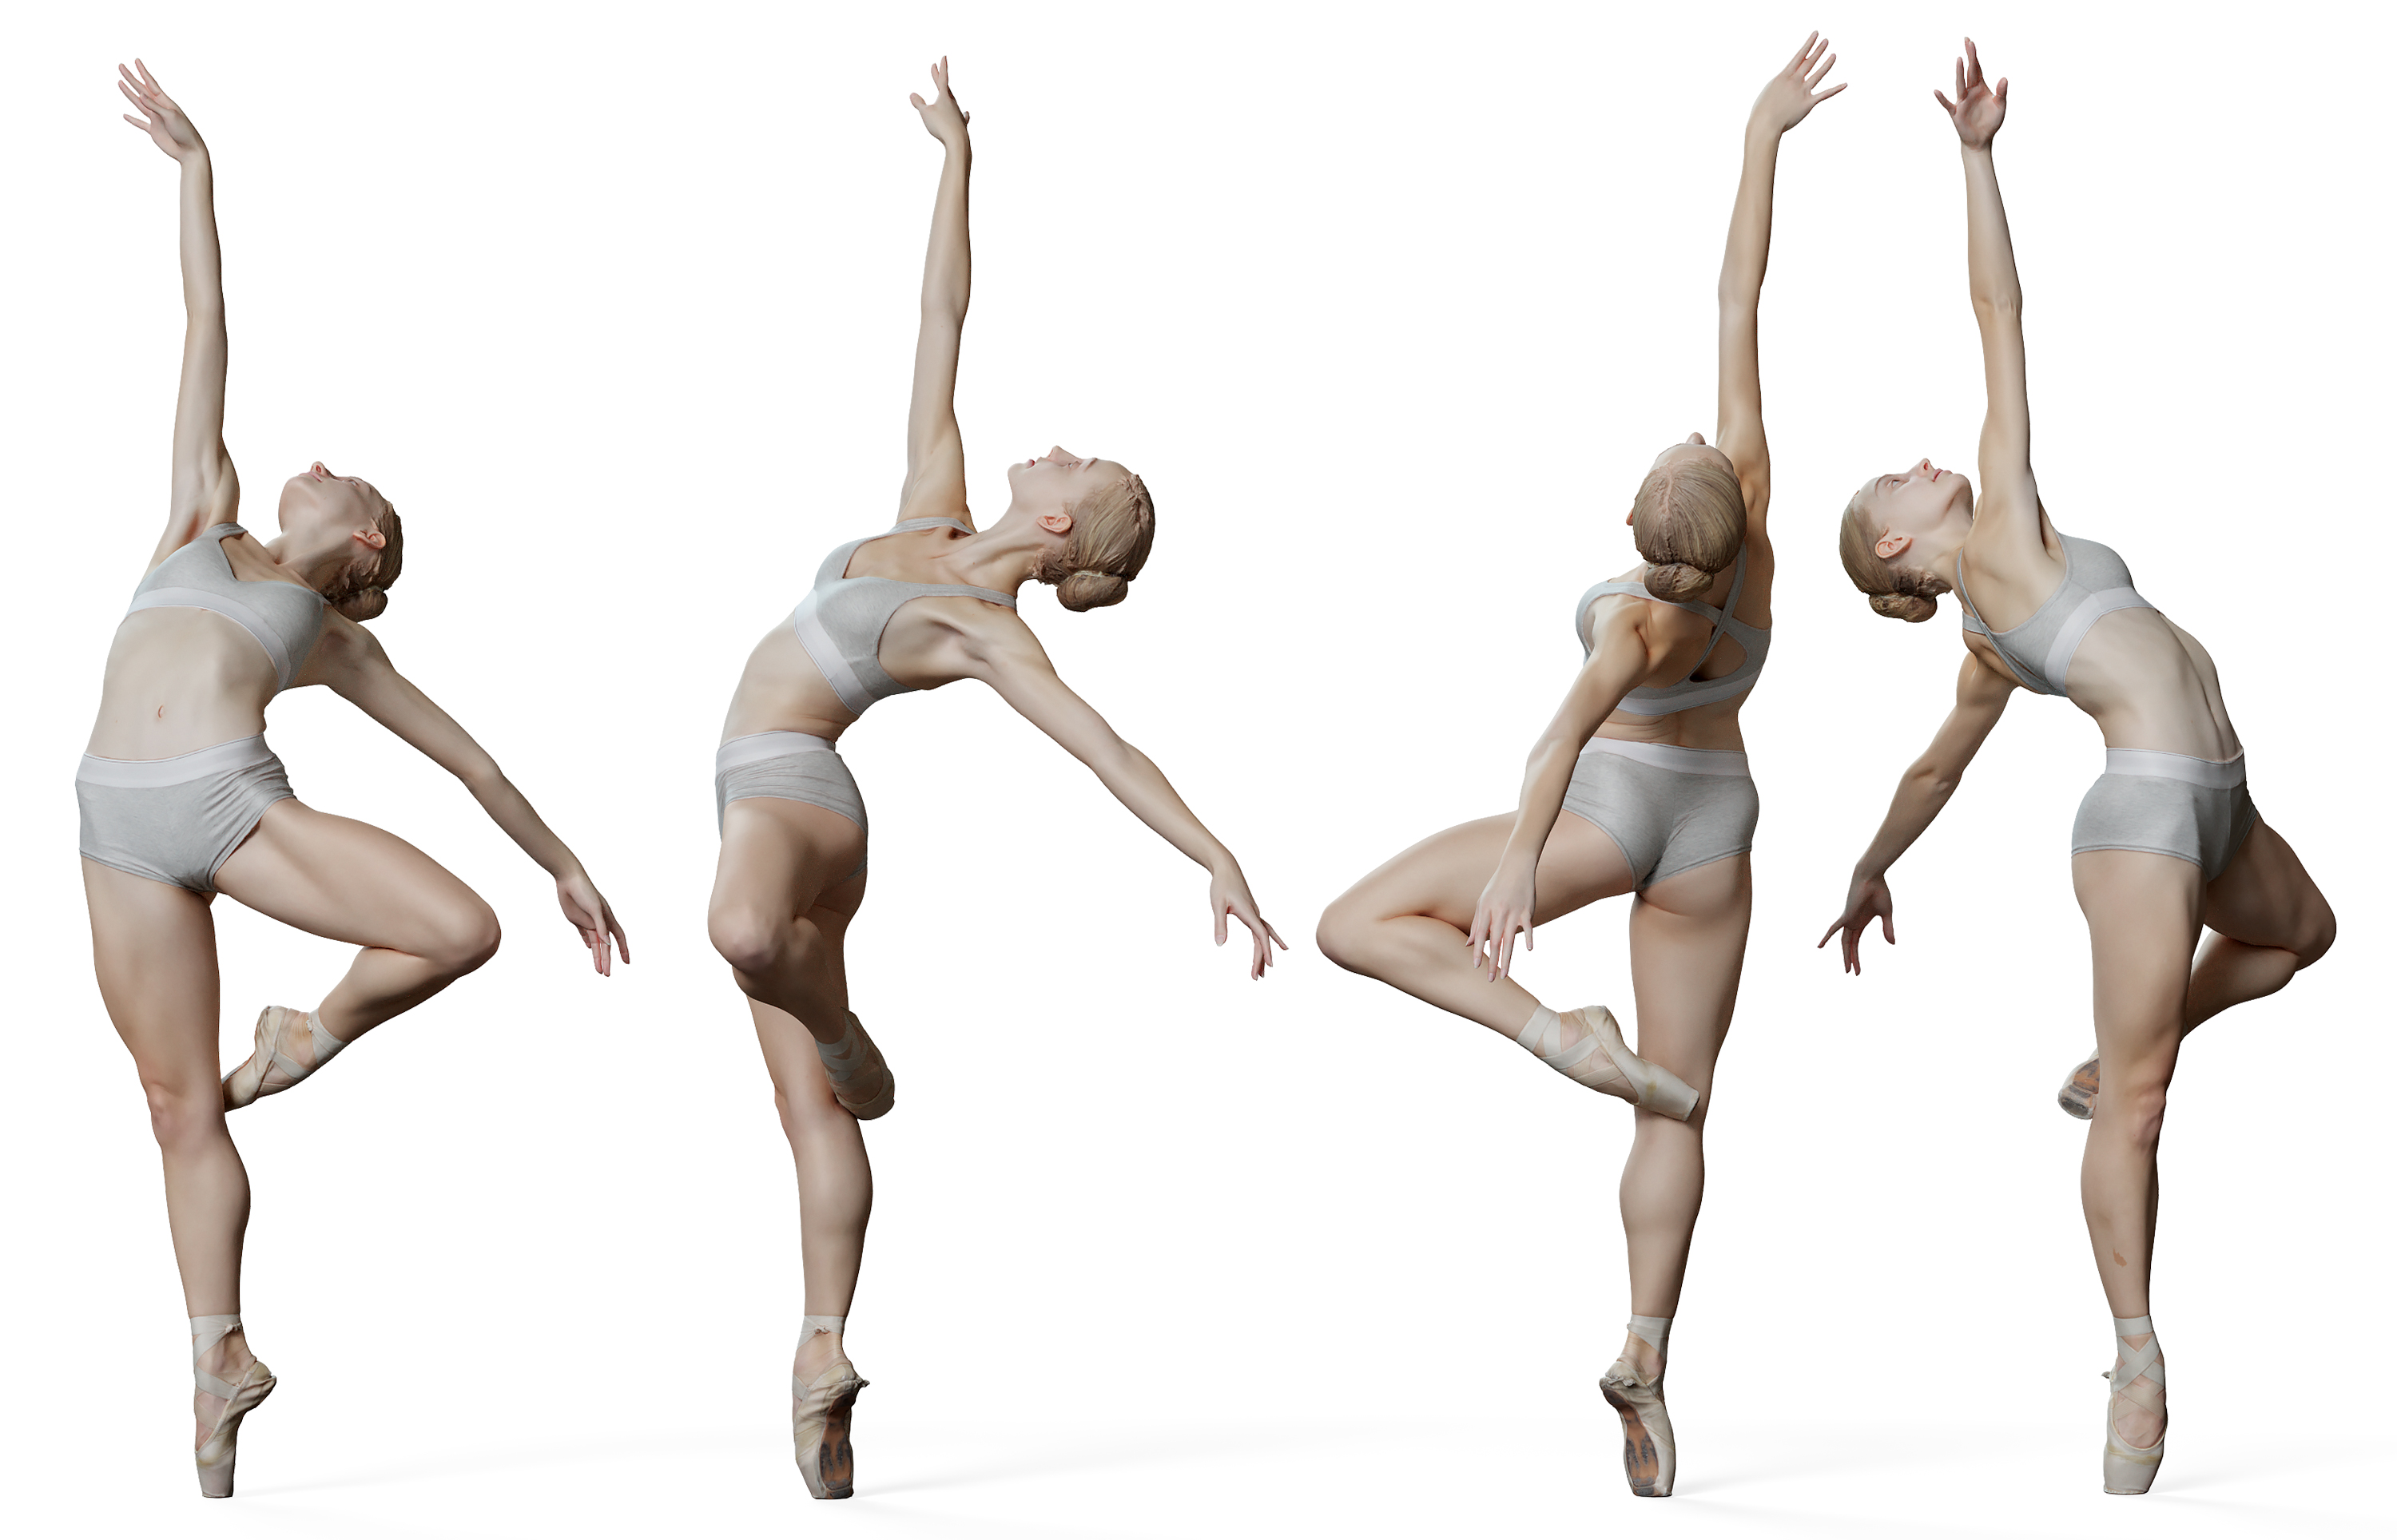 Elegant Ballet Poses for Inspiration